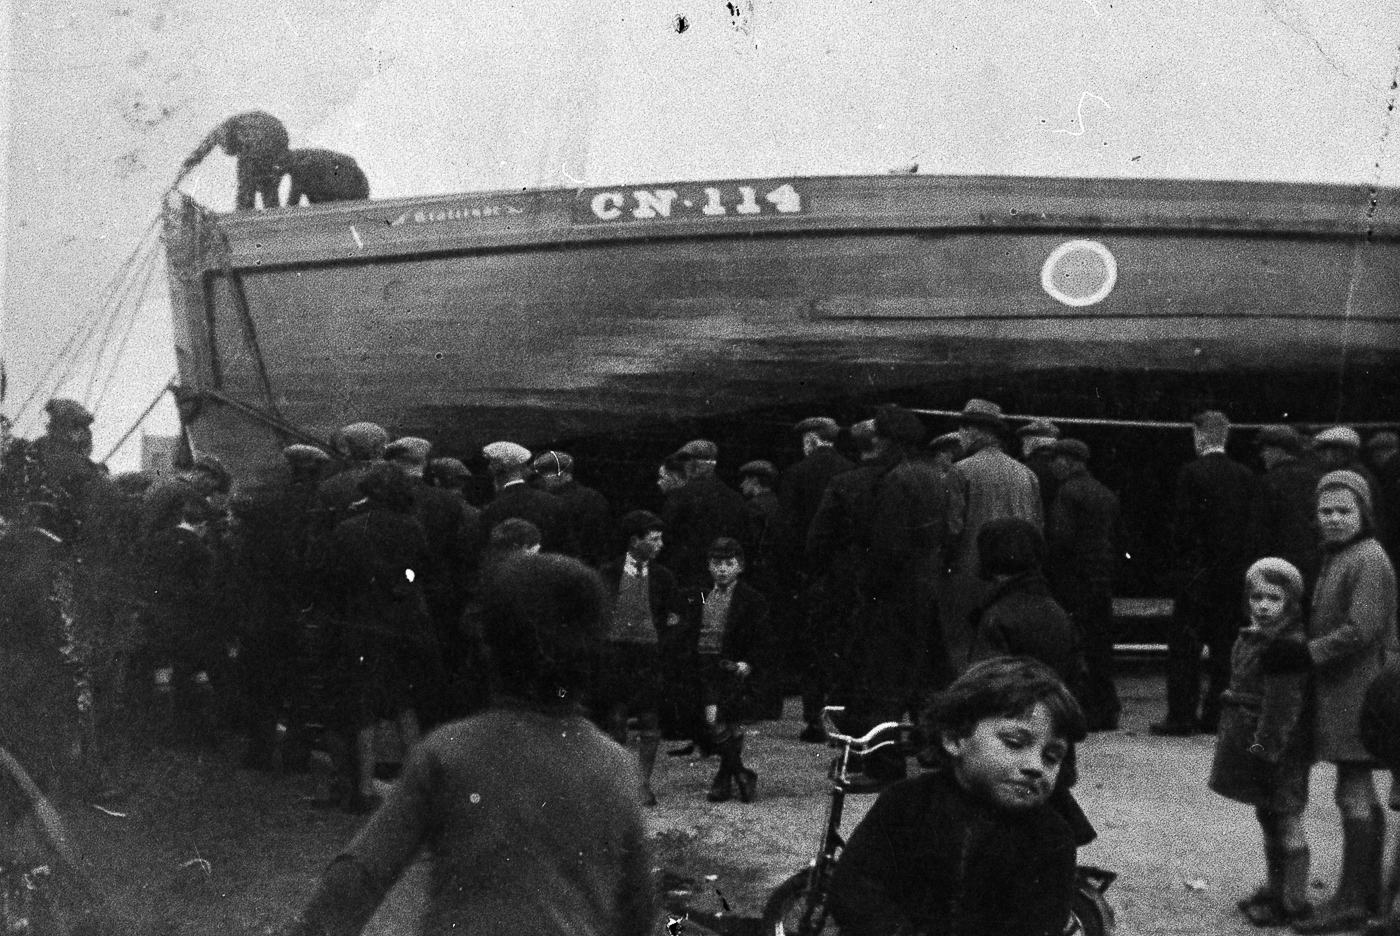 Gratitude CN114, in boatyard, Campbeltown, 1937